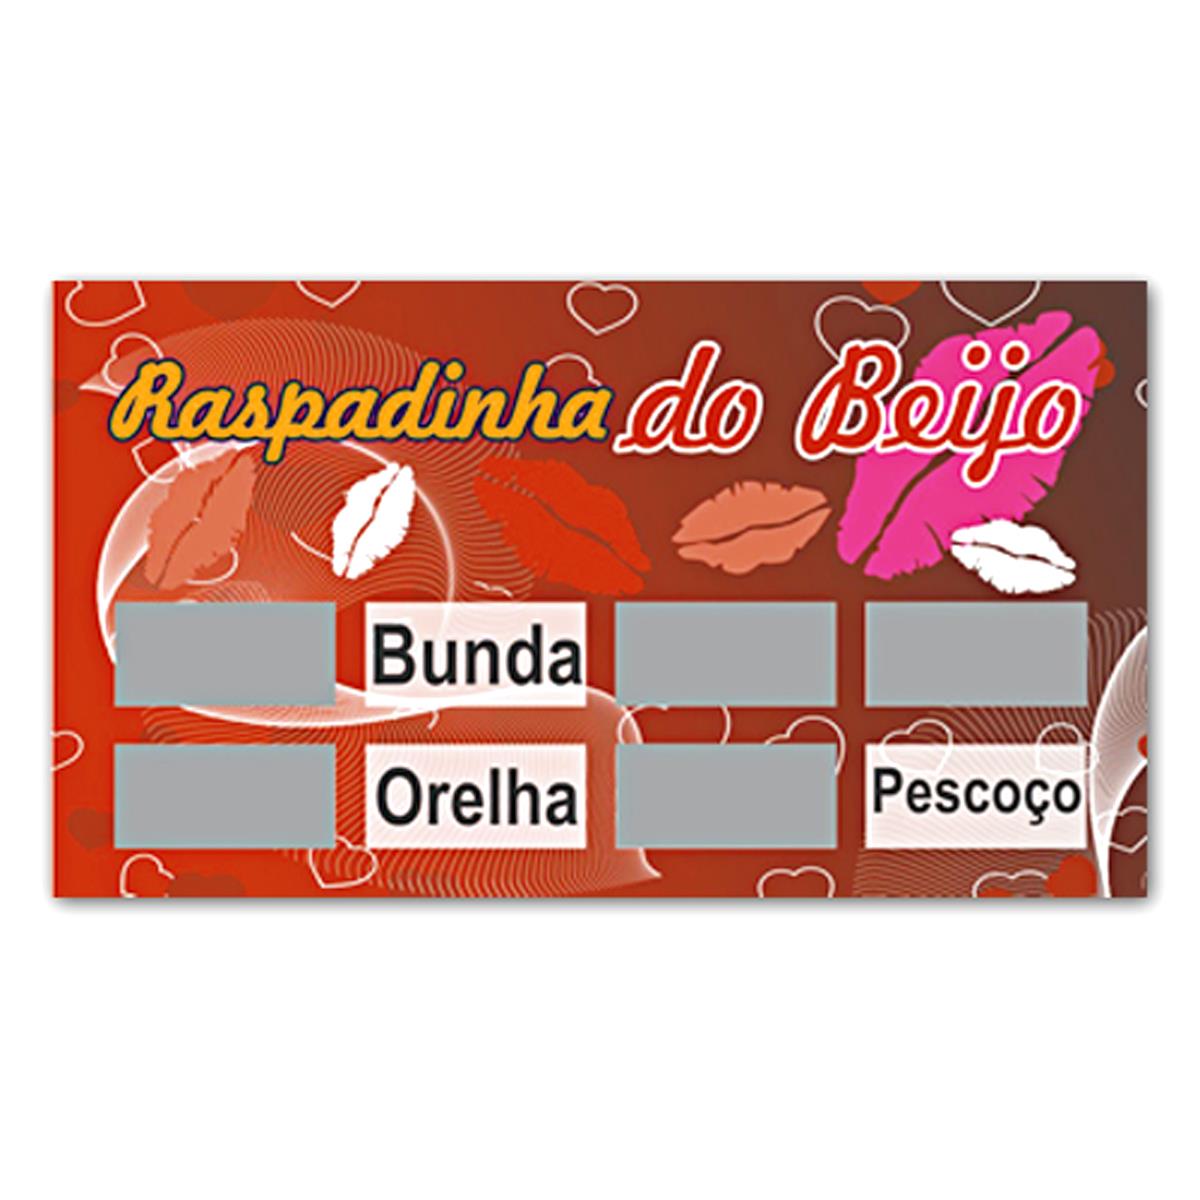 Kit Raspadinha do Amor, Strip Tease, Kama Sutra e do Beijo 12unid Miss Collection - Miess